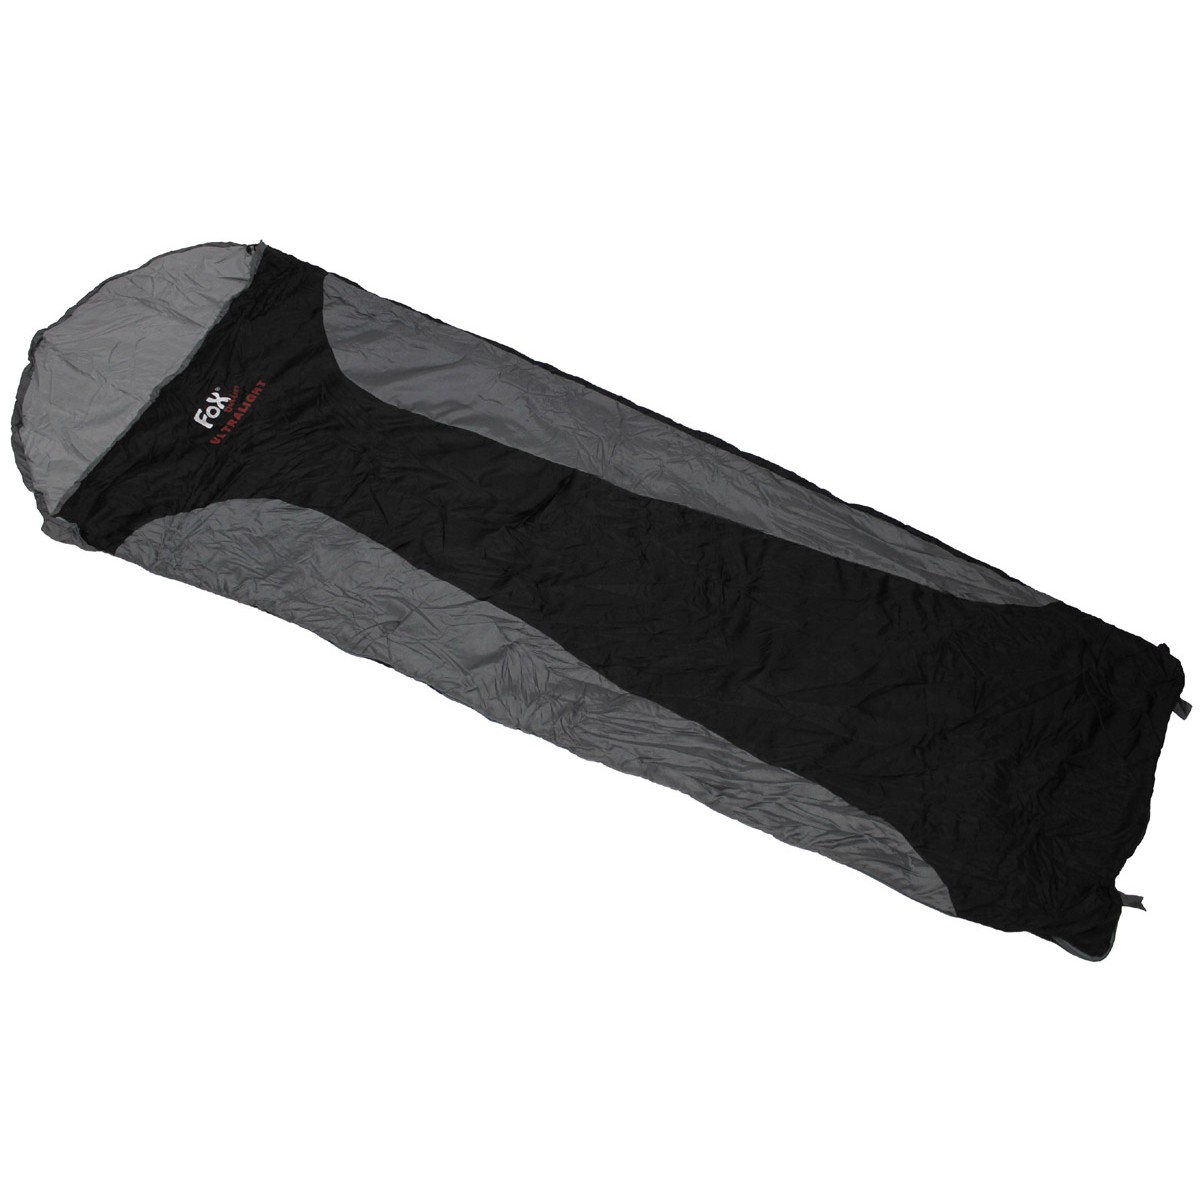 UltraLight Summer Sleeping Bag- Black/Grey